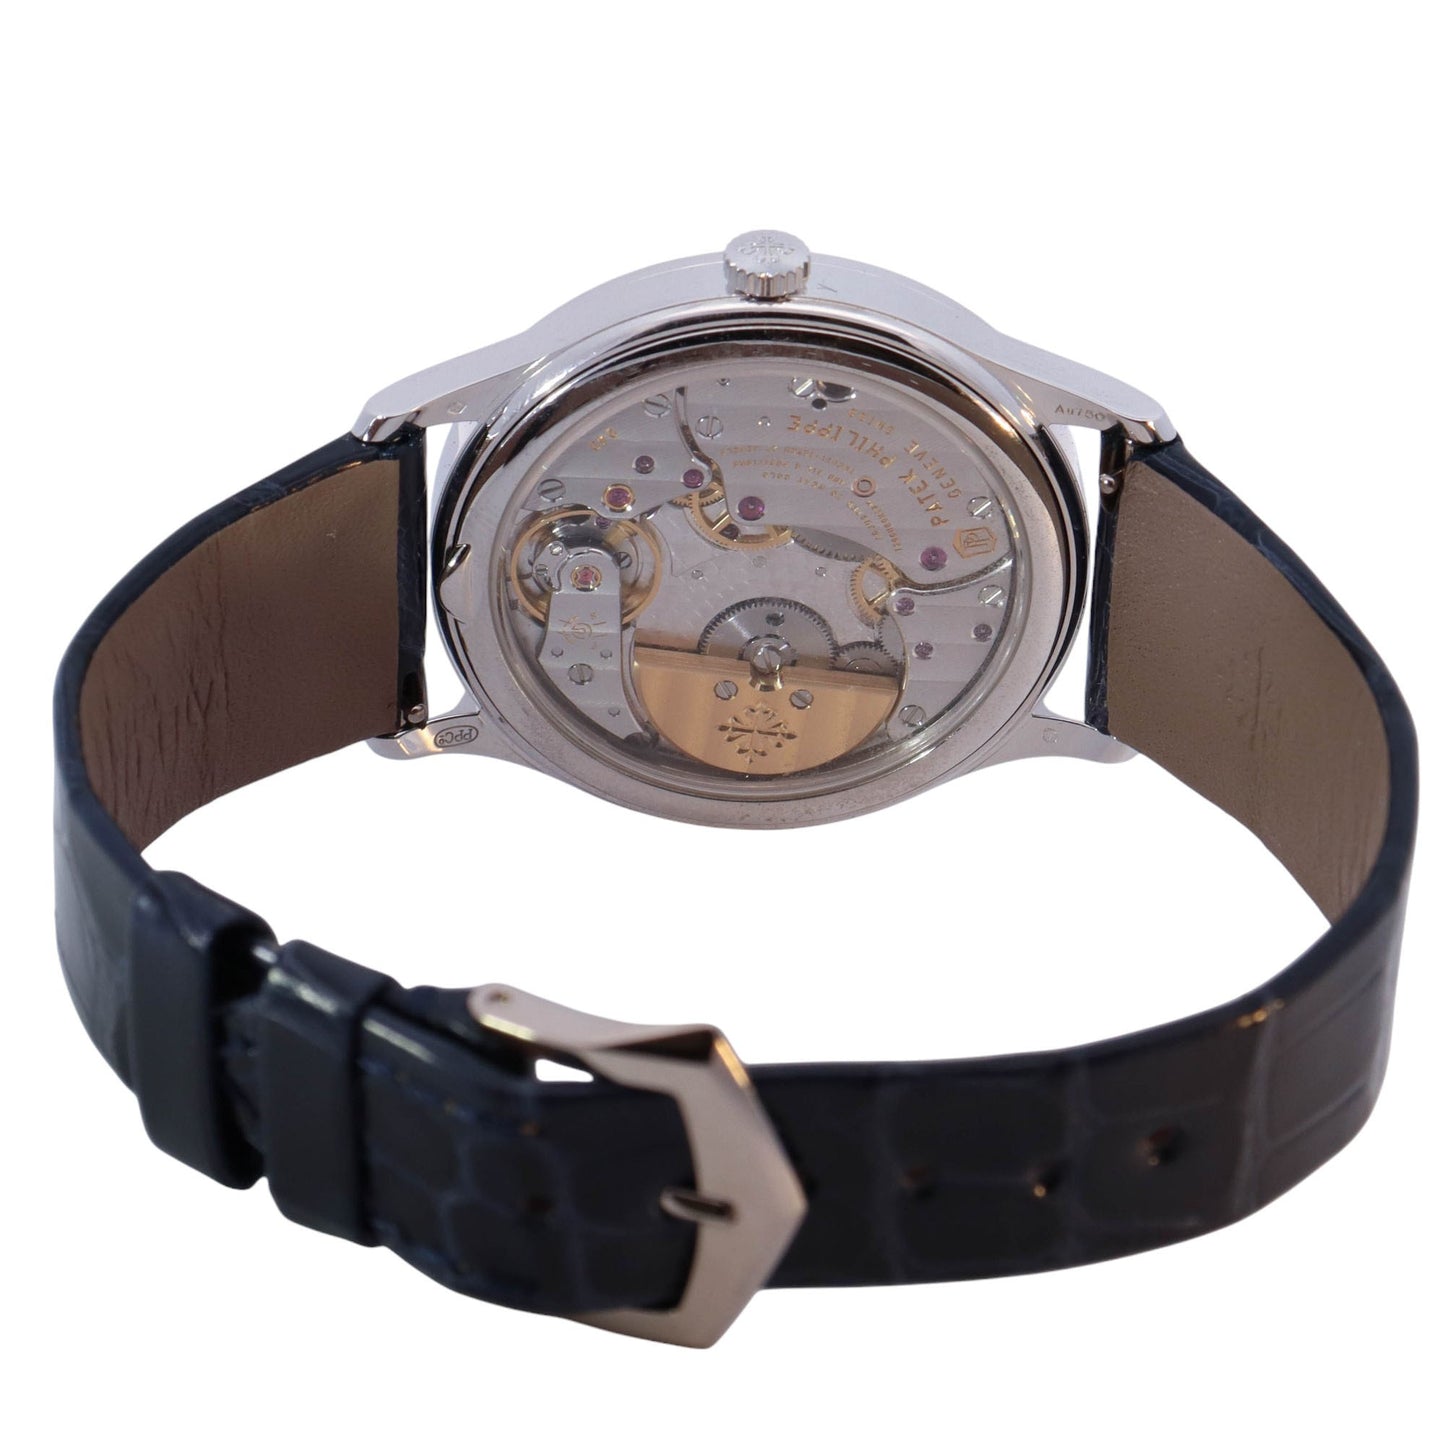 Patek Philippe Calatrava White Gold 35mm Blue Stick Dial Watch Reference# 4997/200G-001